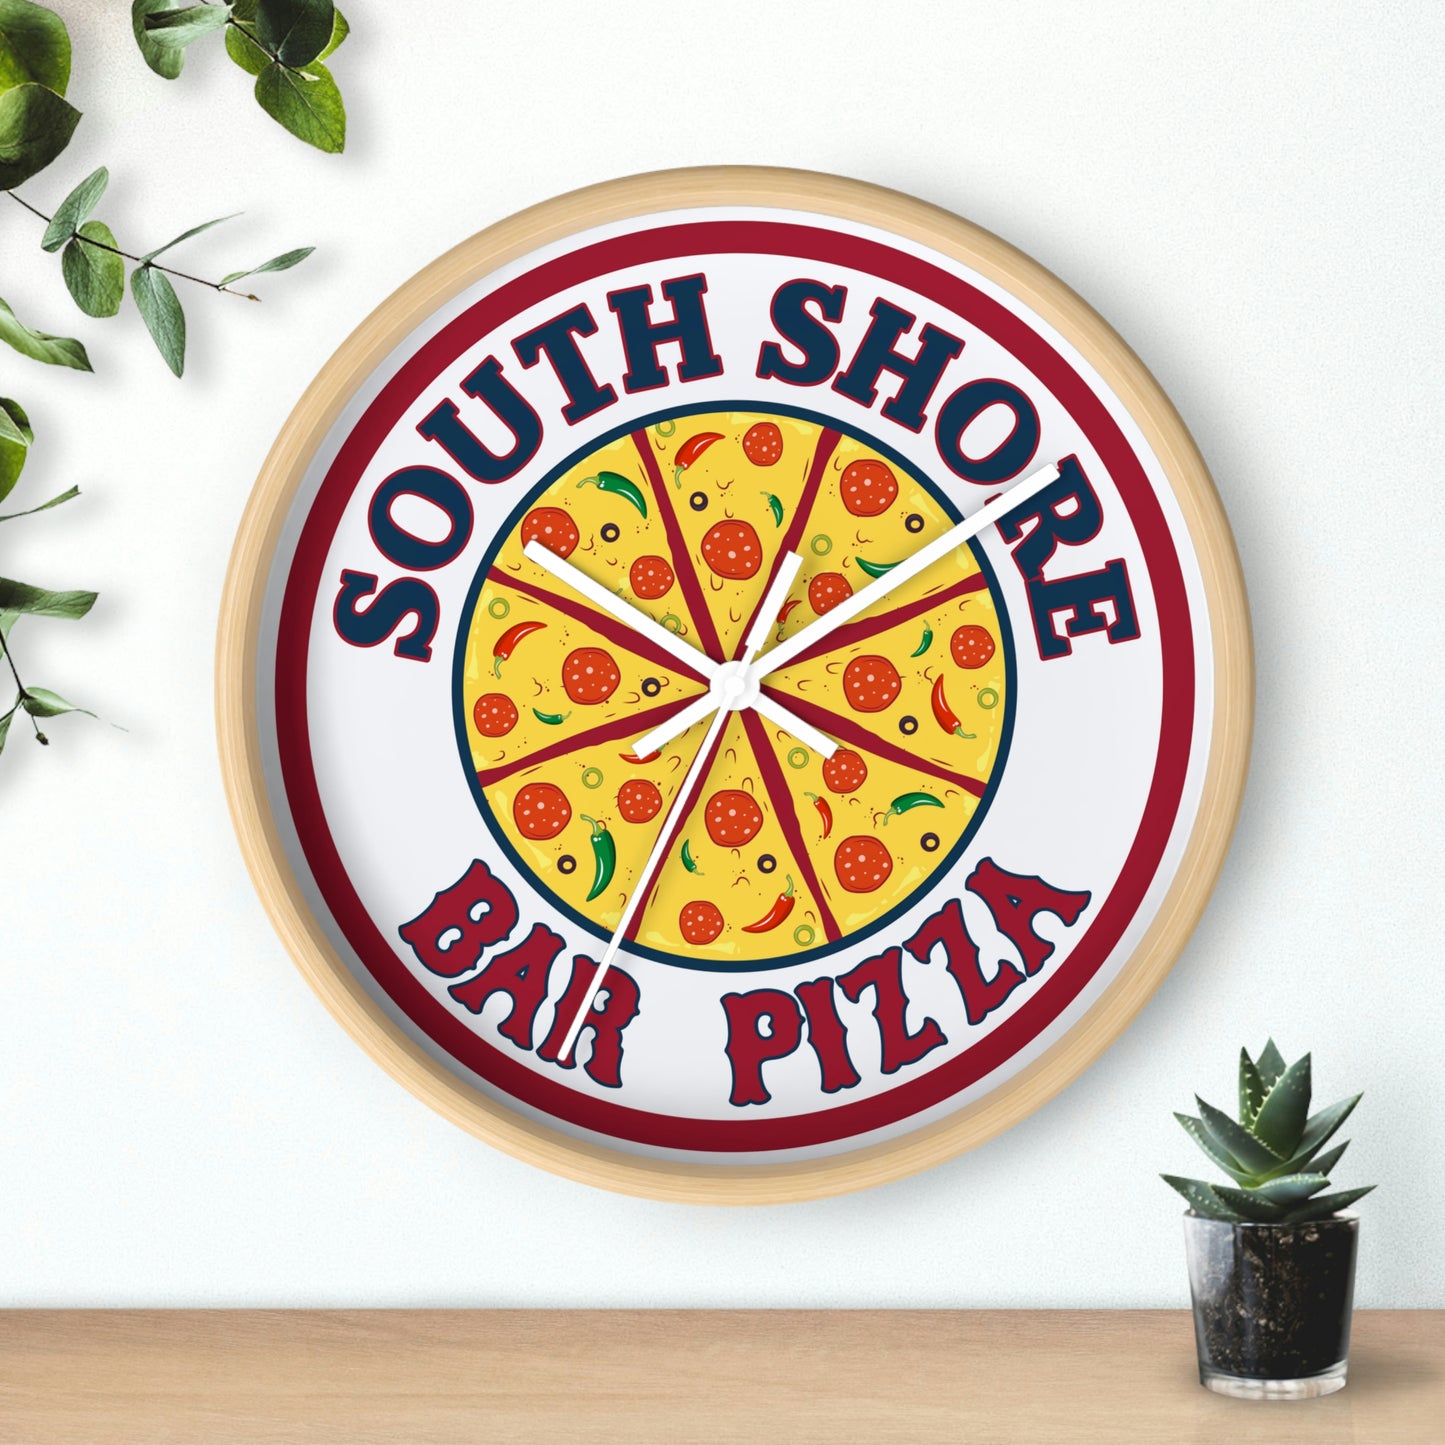 South Shore Bar Pizza Wall Clock